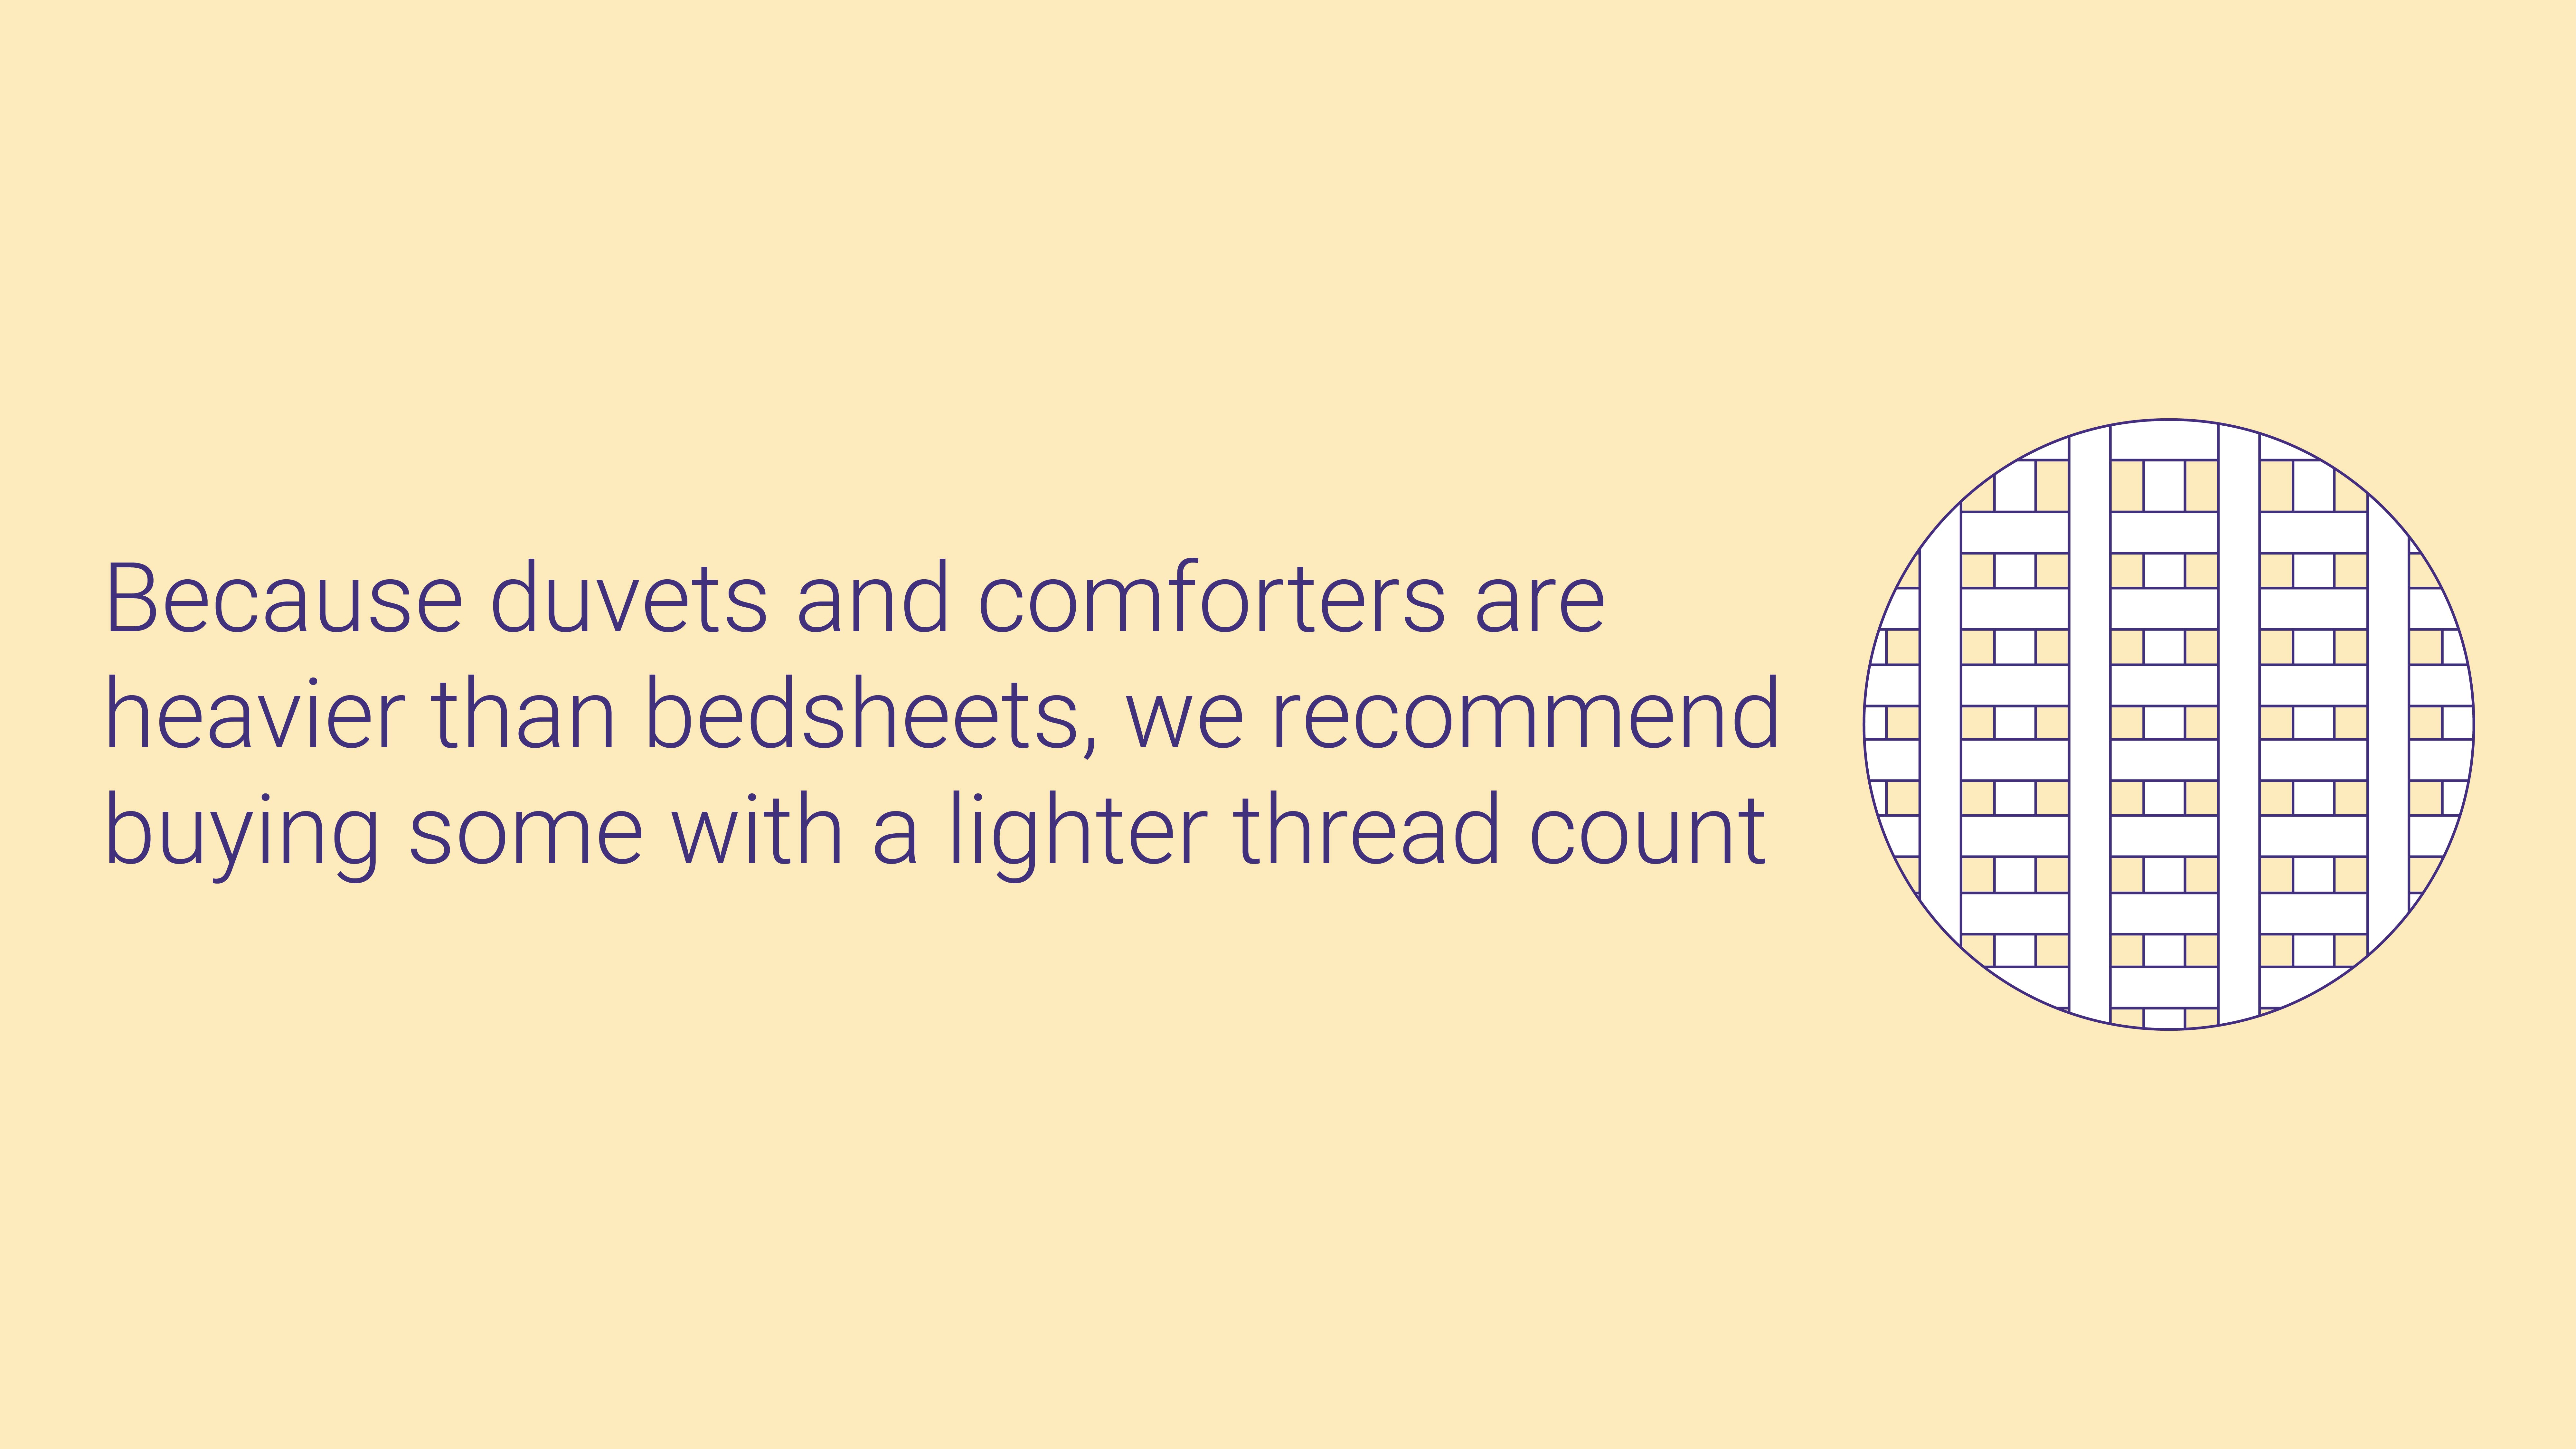 Duvet vs. Comforters